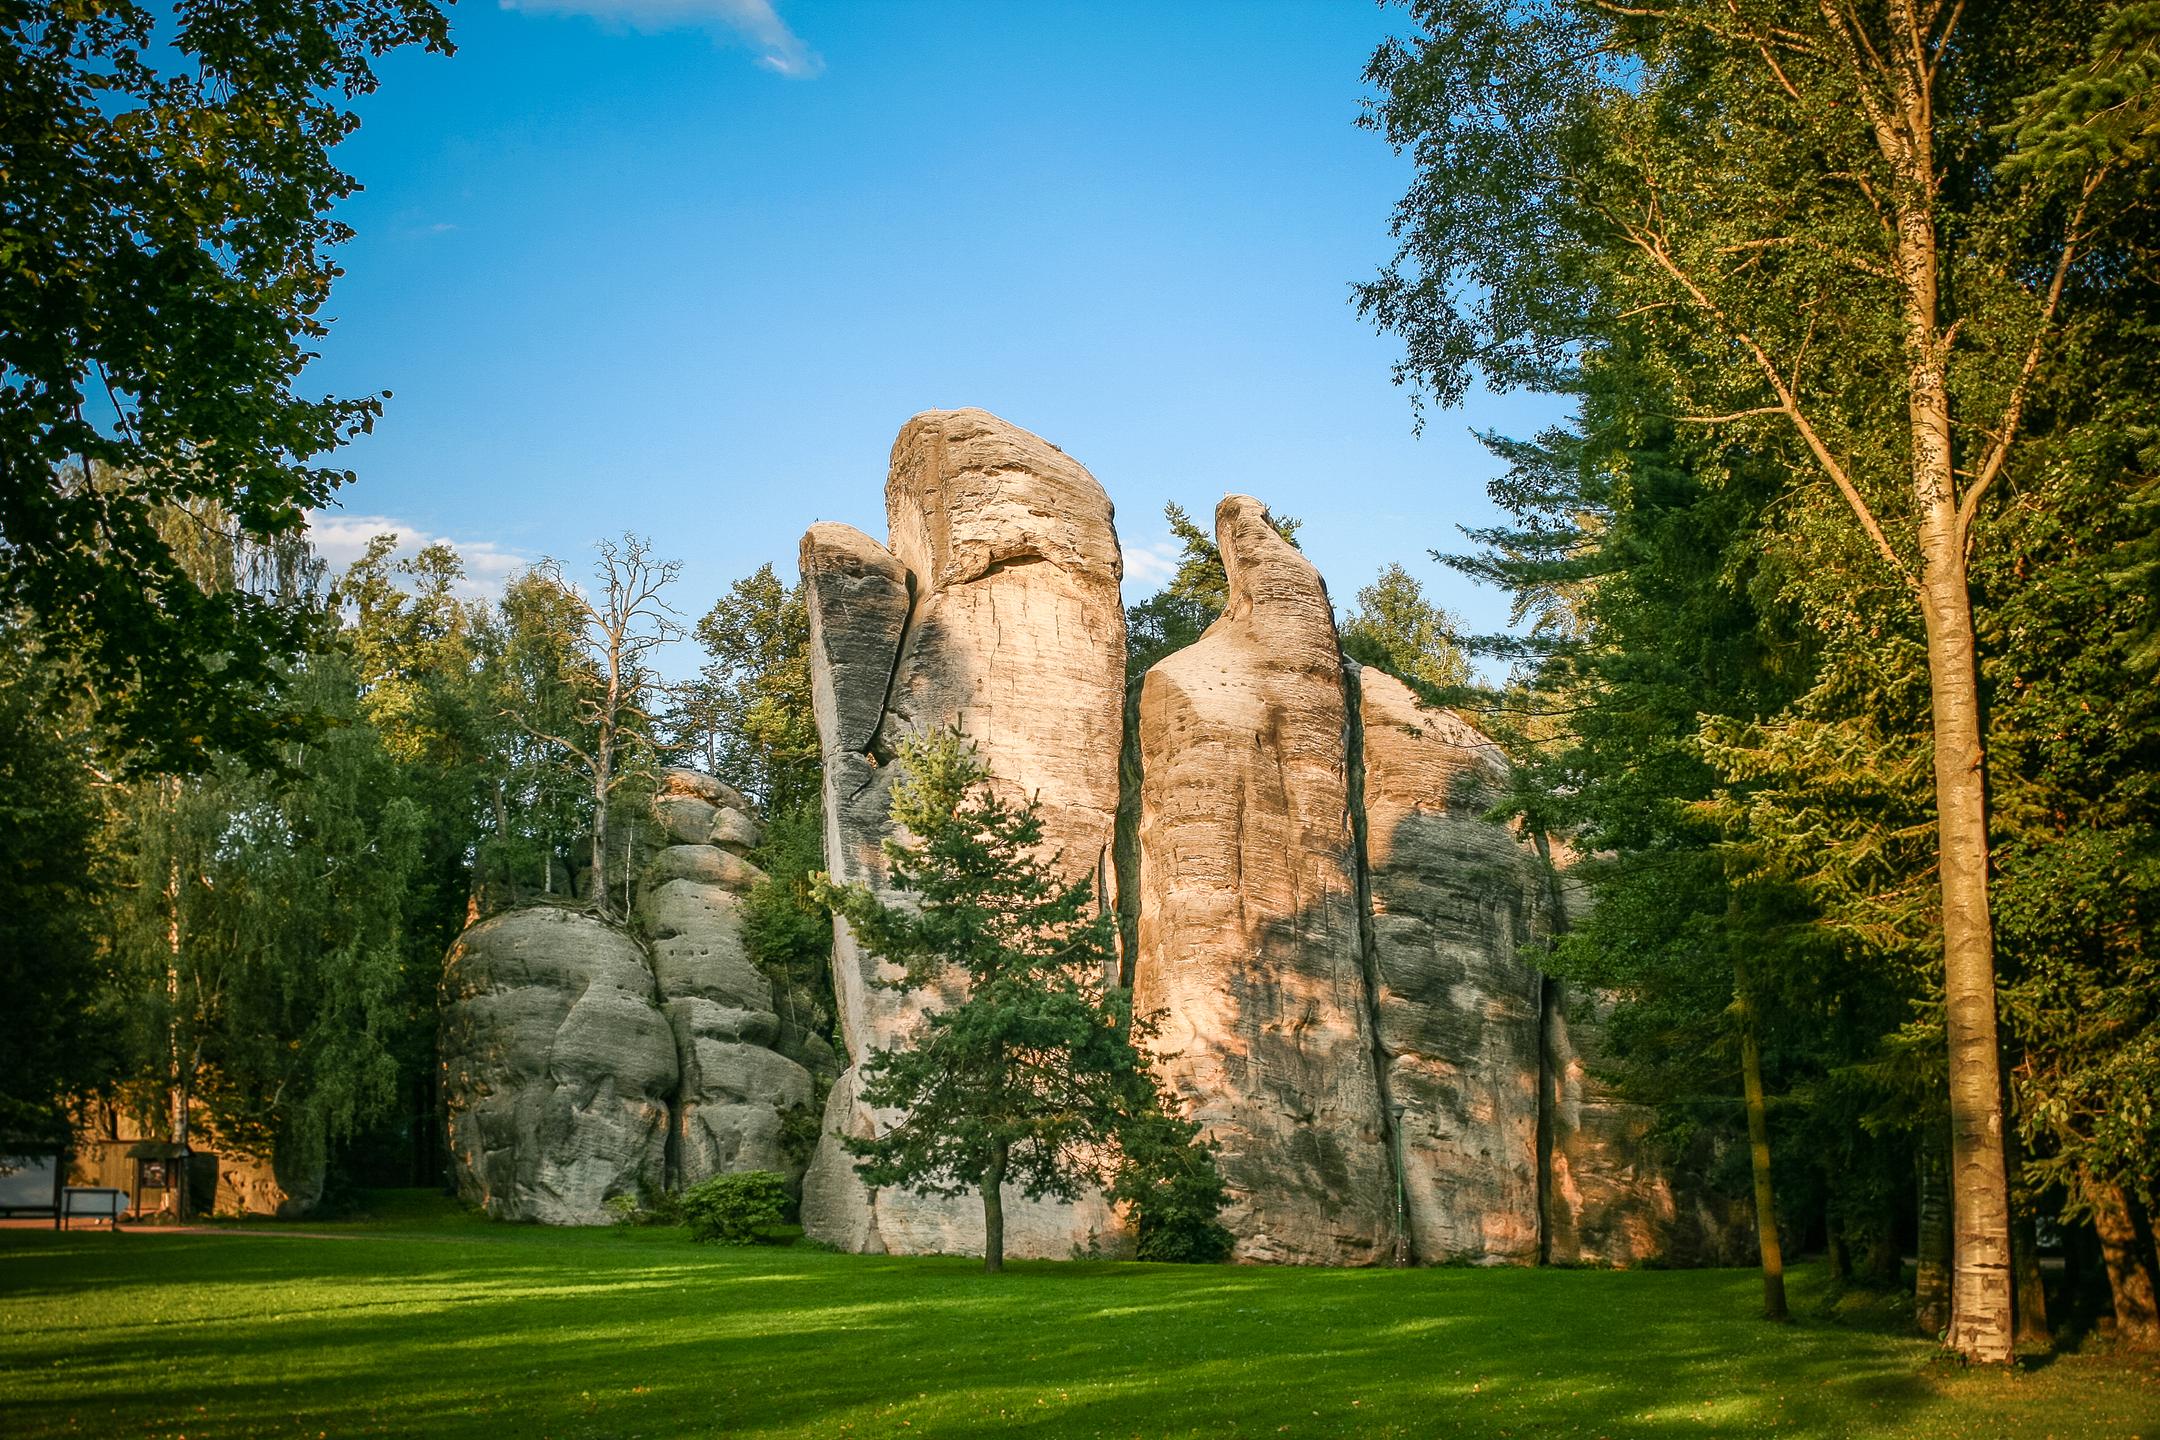 The city of rocks in the Czech Republic